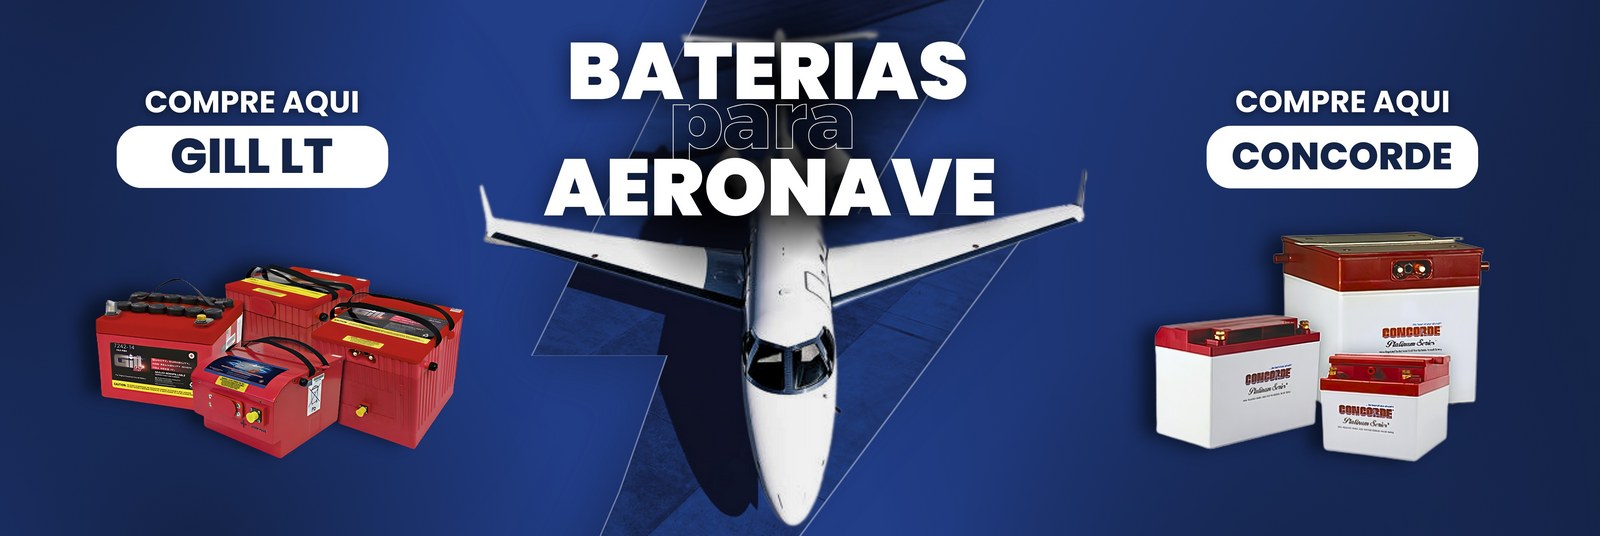 Banner Baterias para aeronaves apex shop